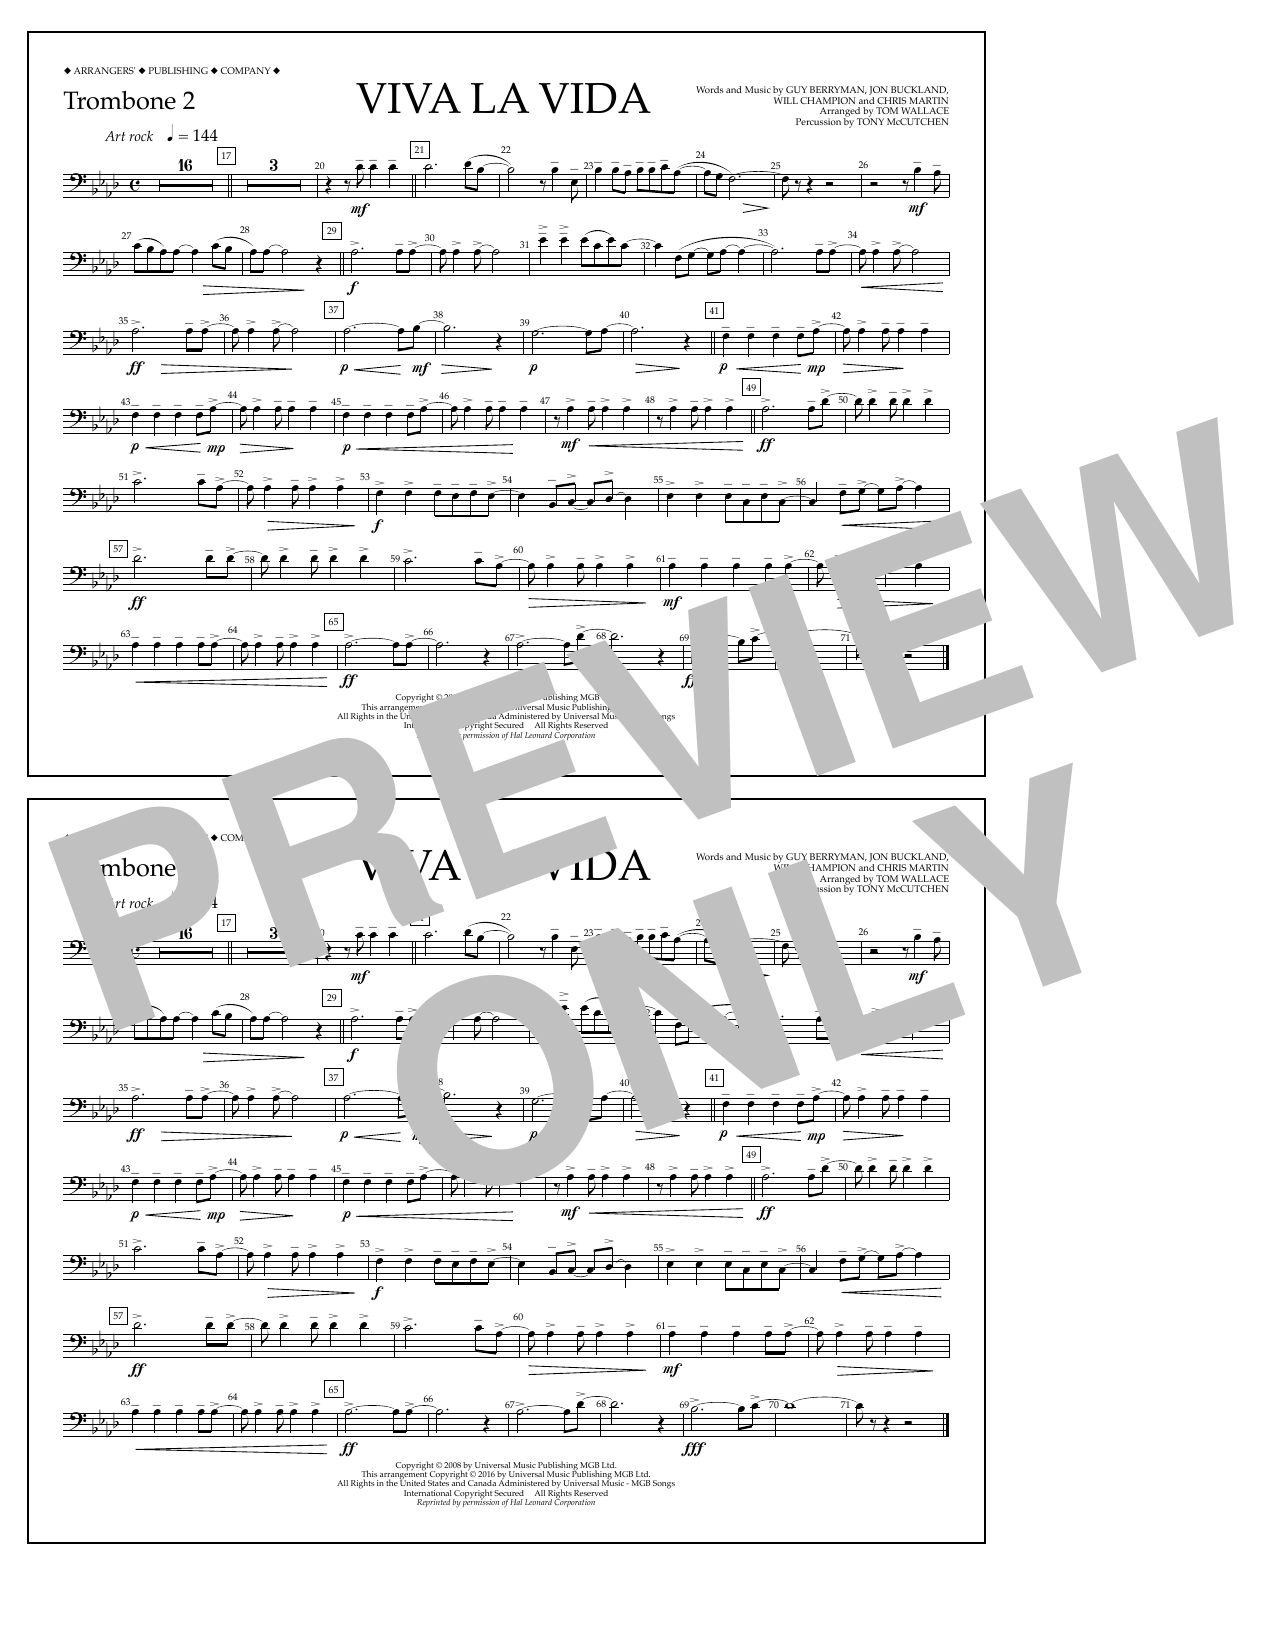 Tom Wallace Viva La Vida - Trombone 2 Sheet Music Notes & Chords for Marching Band - Download or Print PDF